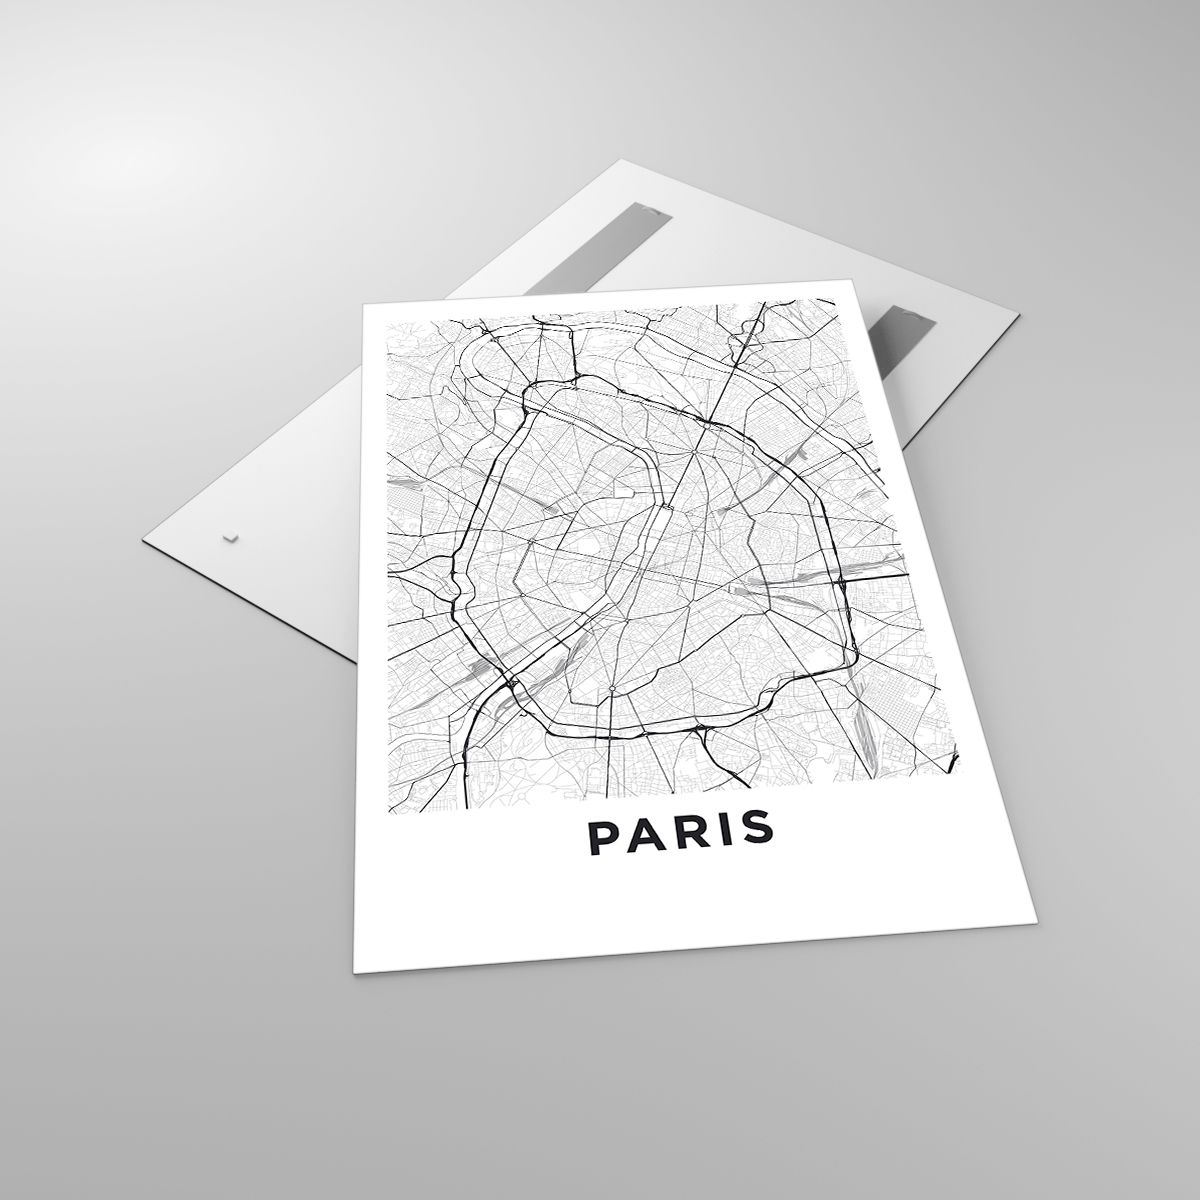 Glasbild Stadt, Glasbild Stadtkarte, Glasbild Paris, Glasbild Grafik, Glasbild Frankreich